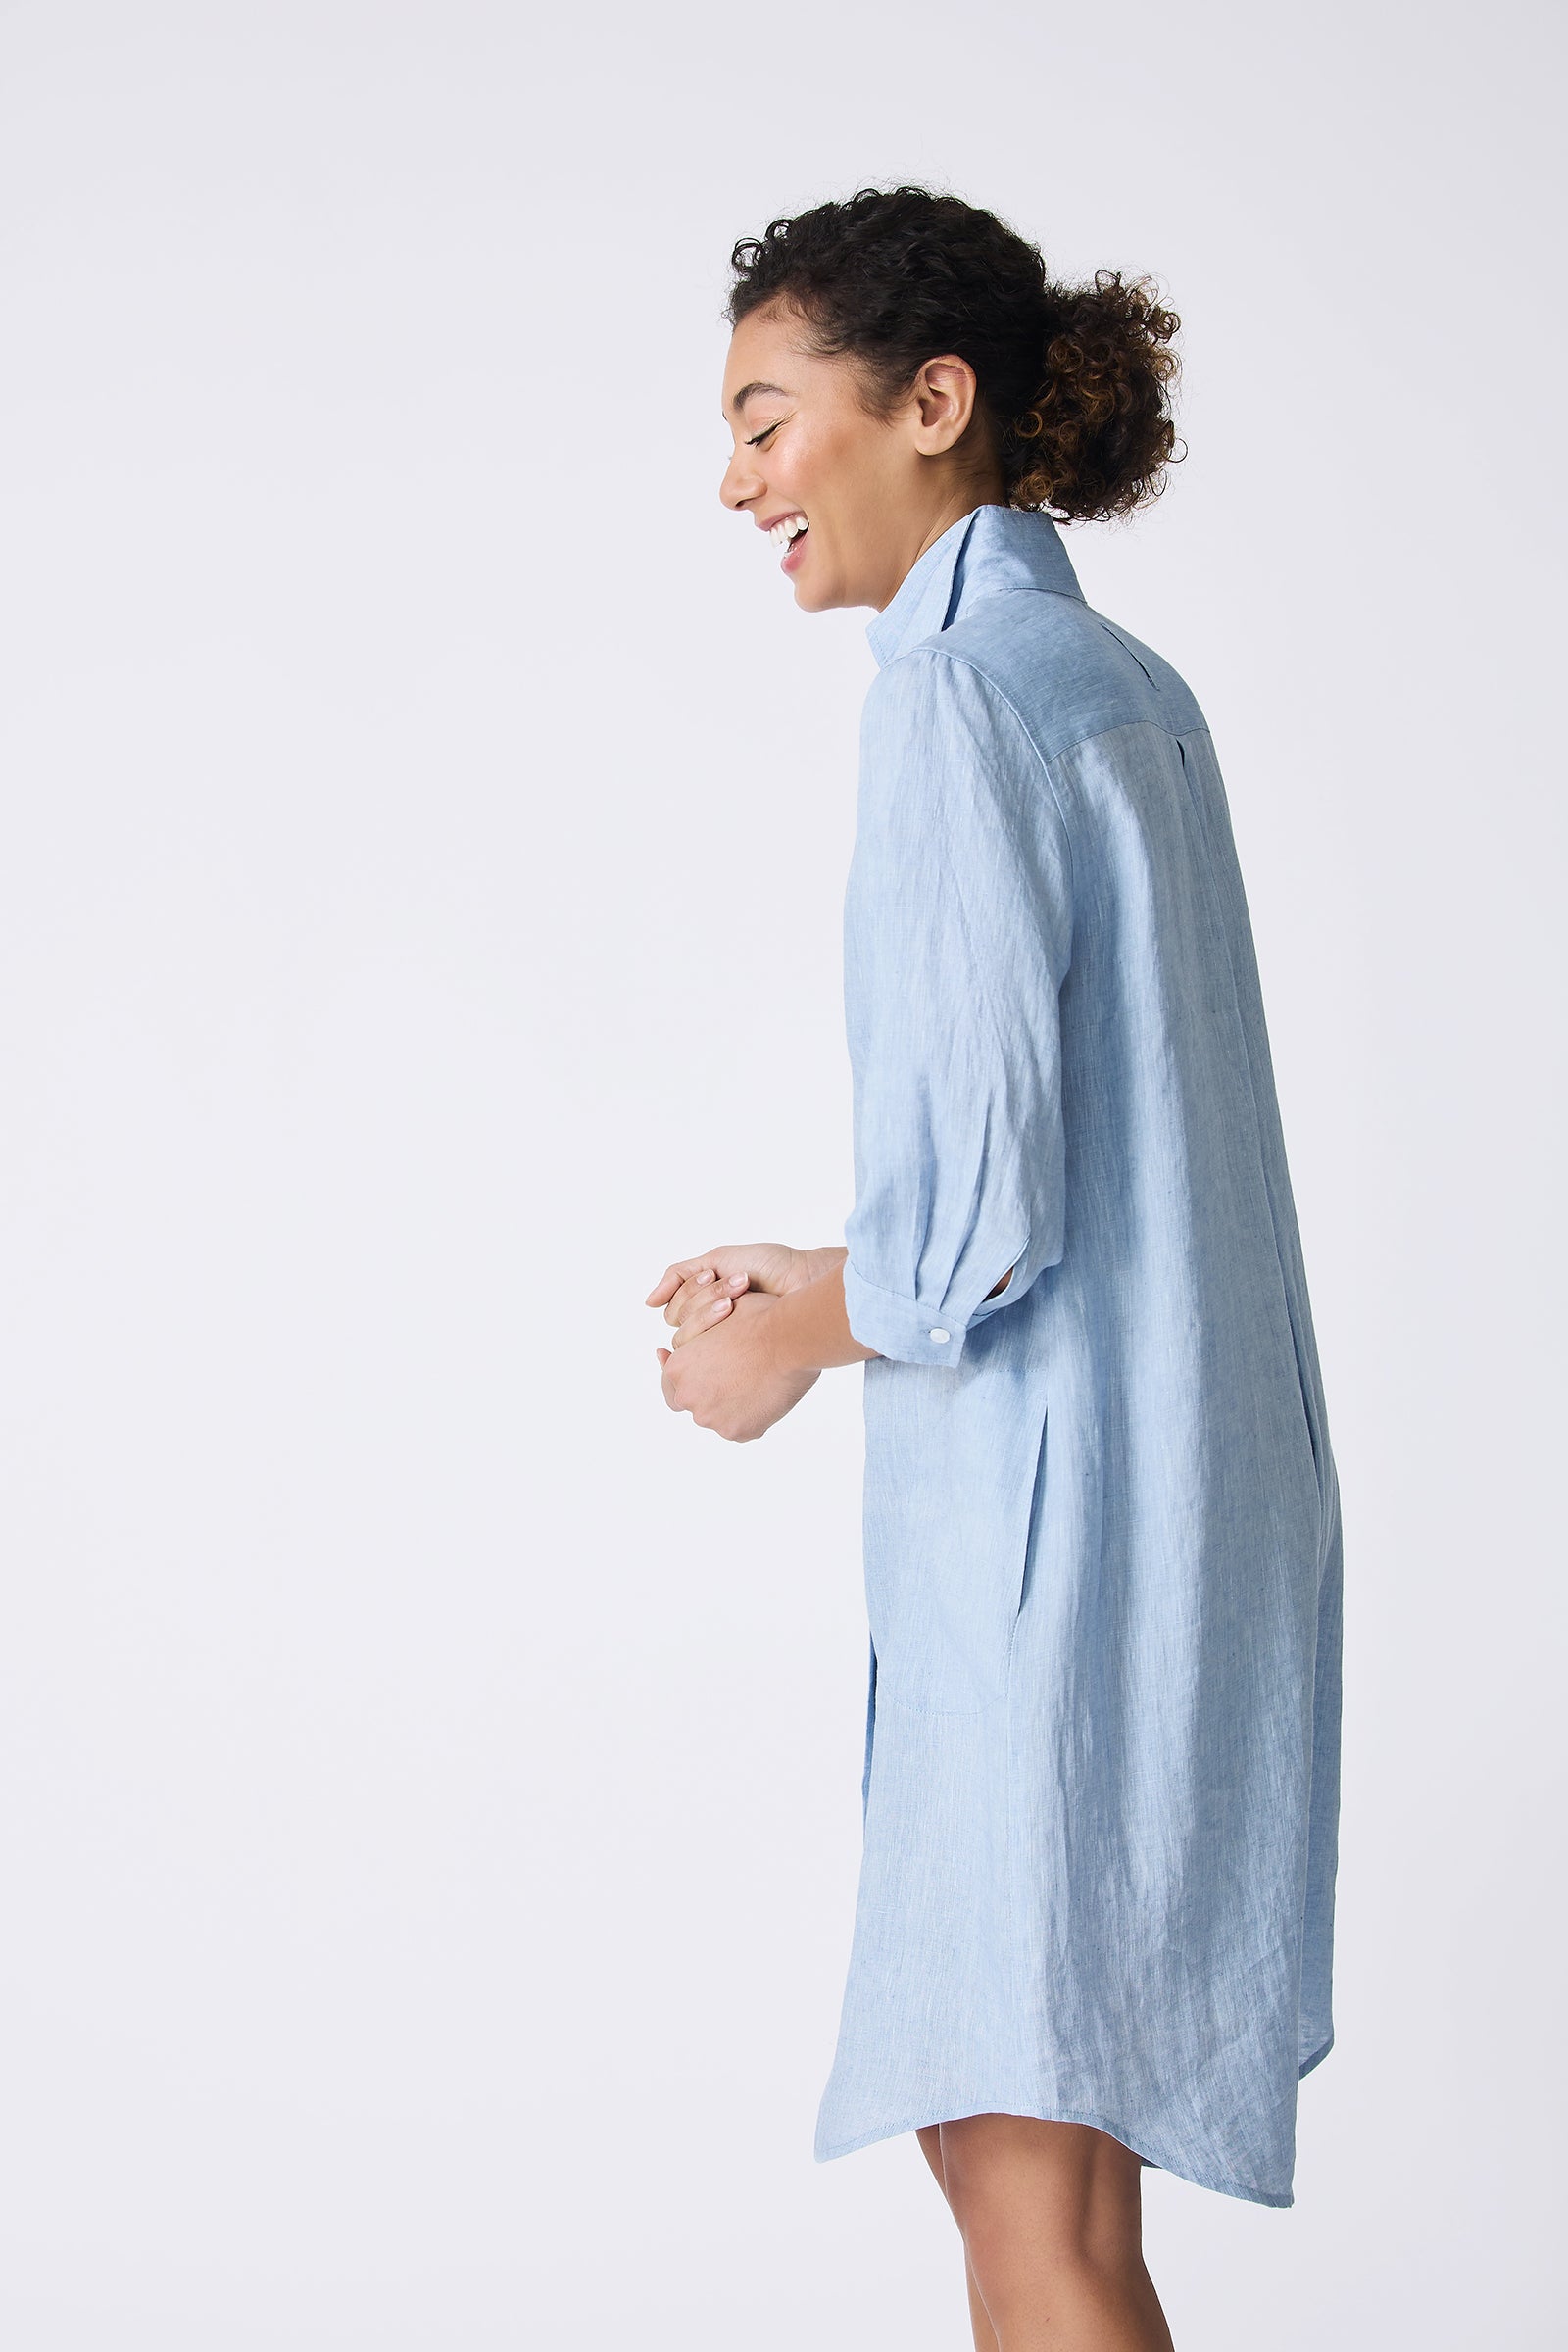 Kal Rieman Katie Shirt Dress in Sky Blue on model laughing side view